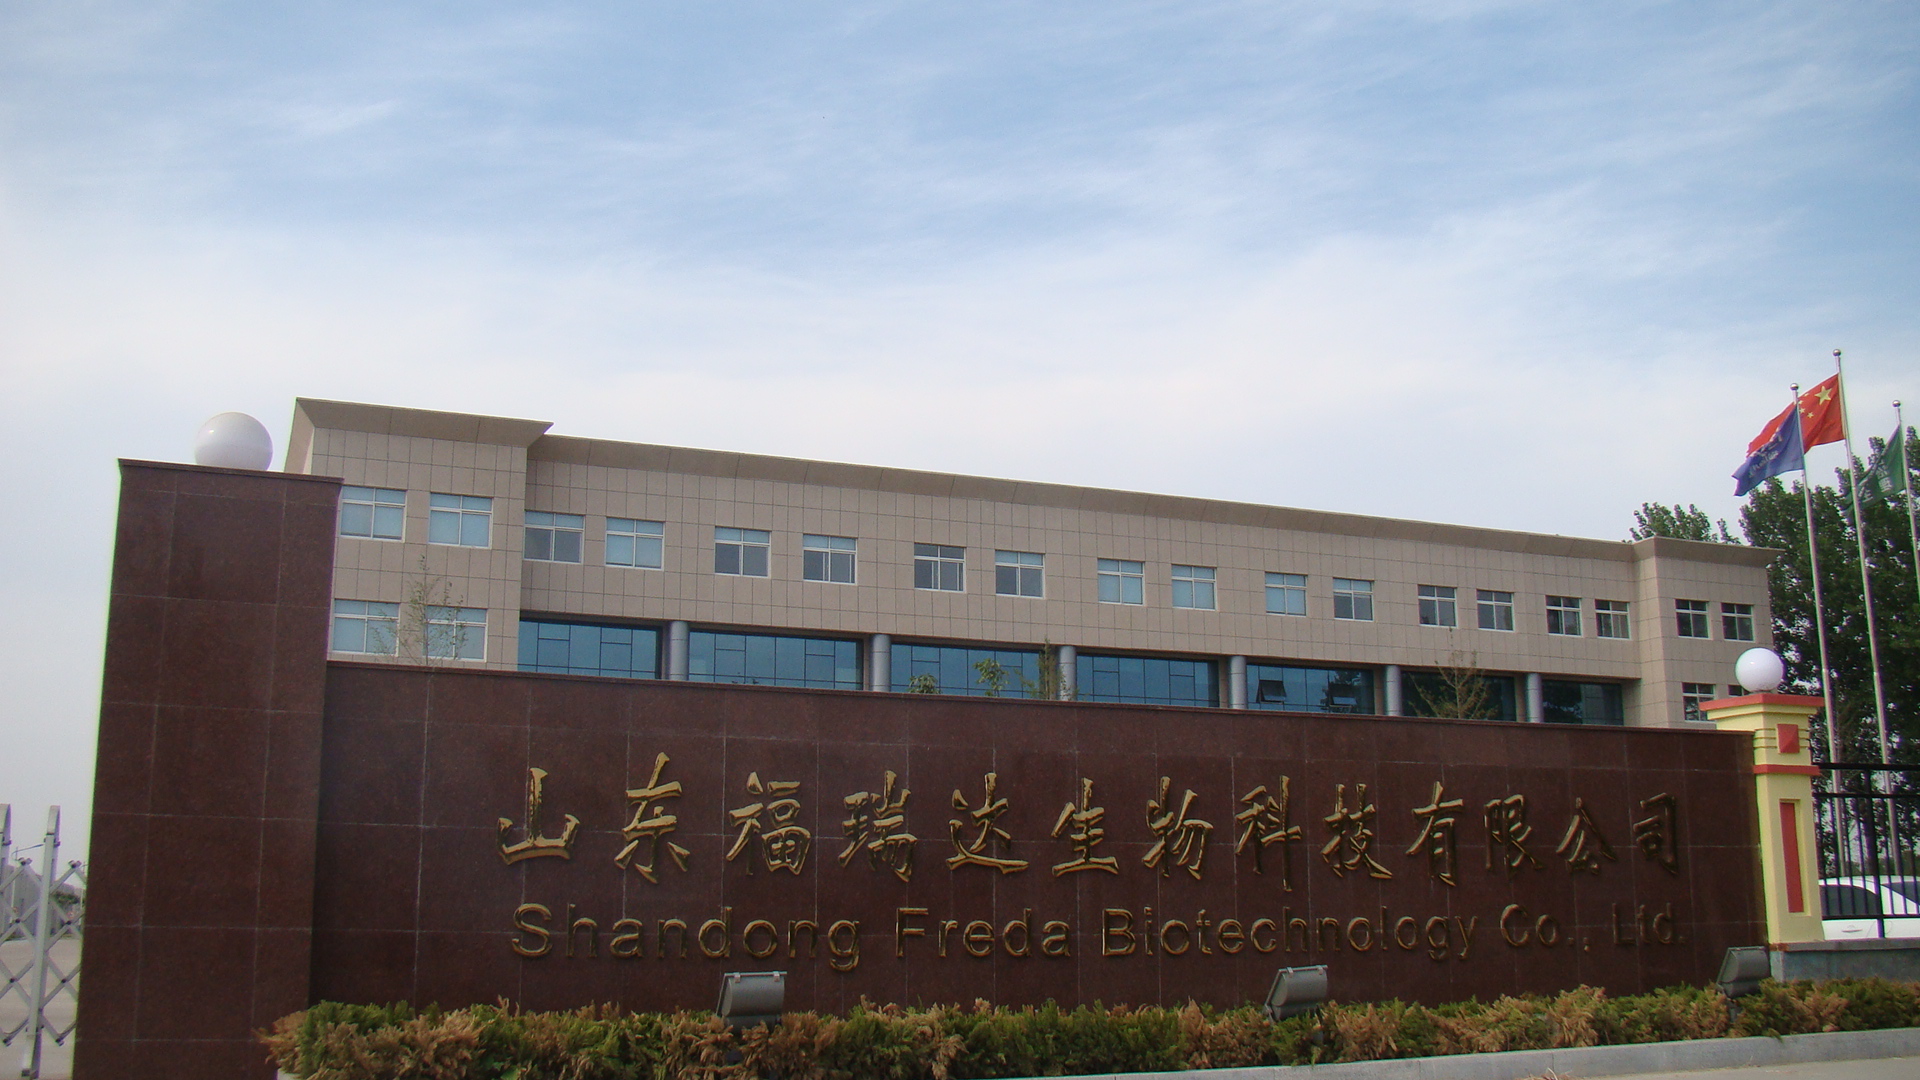 Shandong Freda Biotechnology Co., Ltd